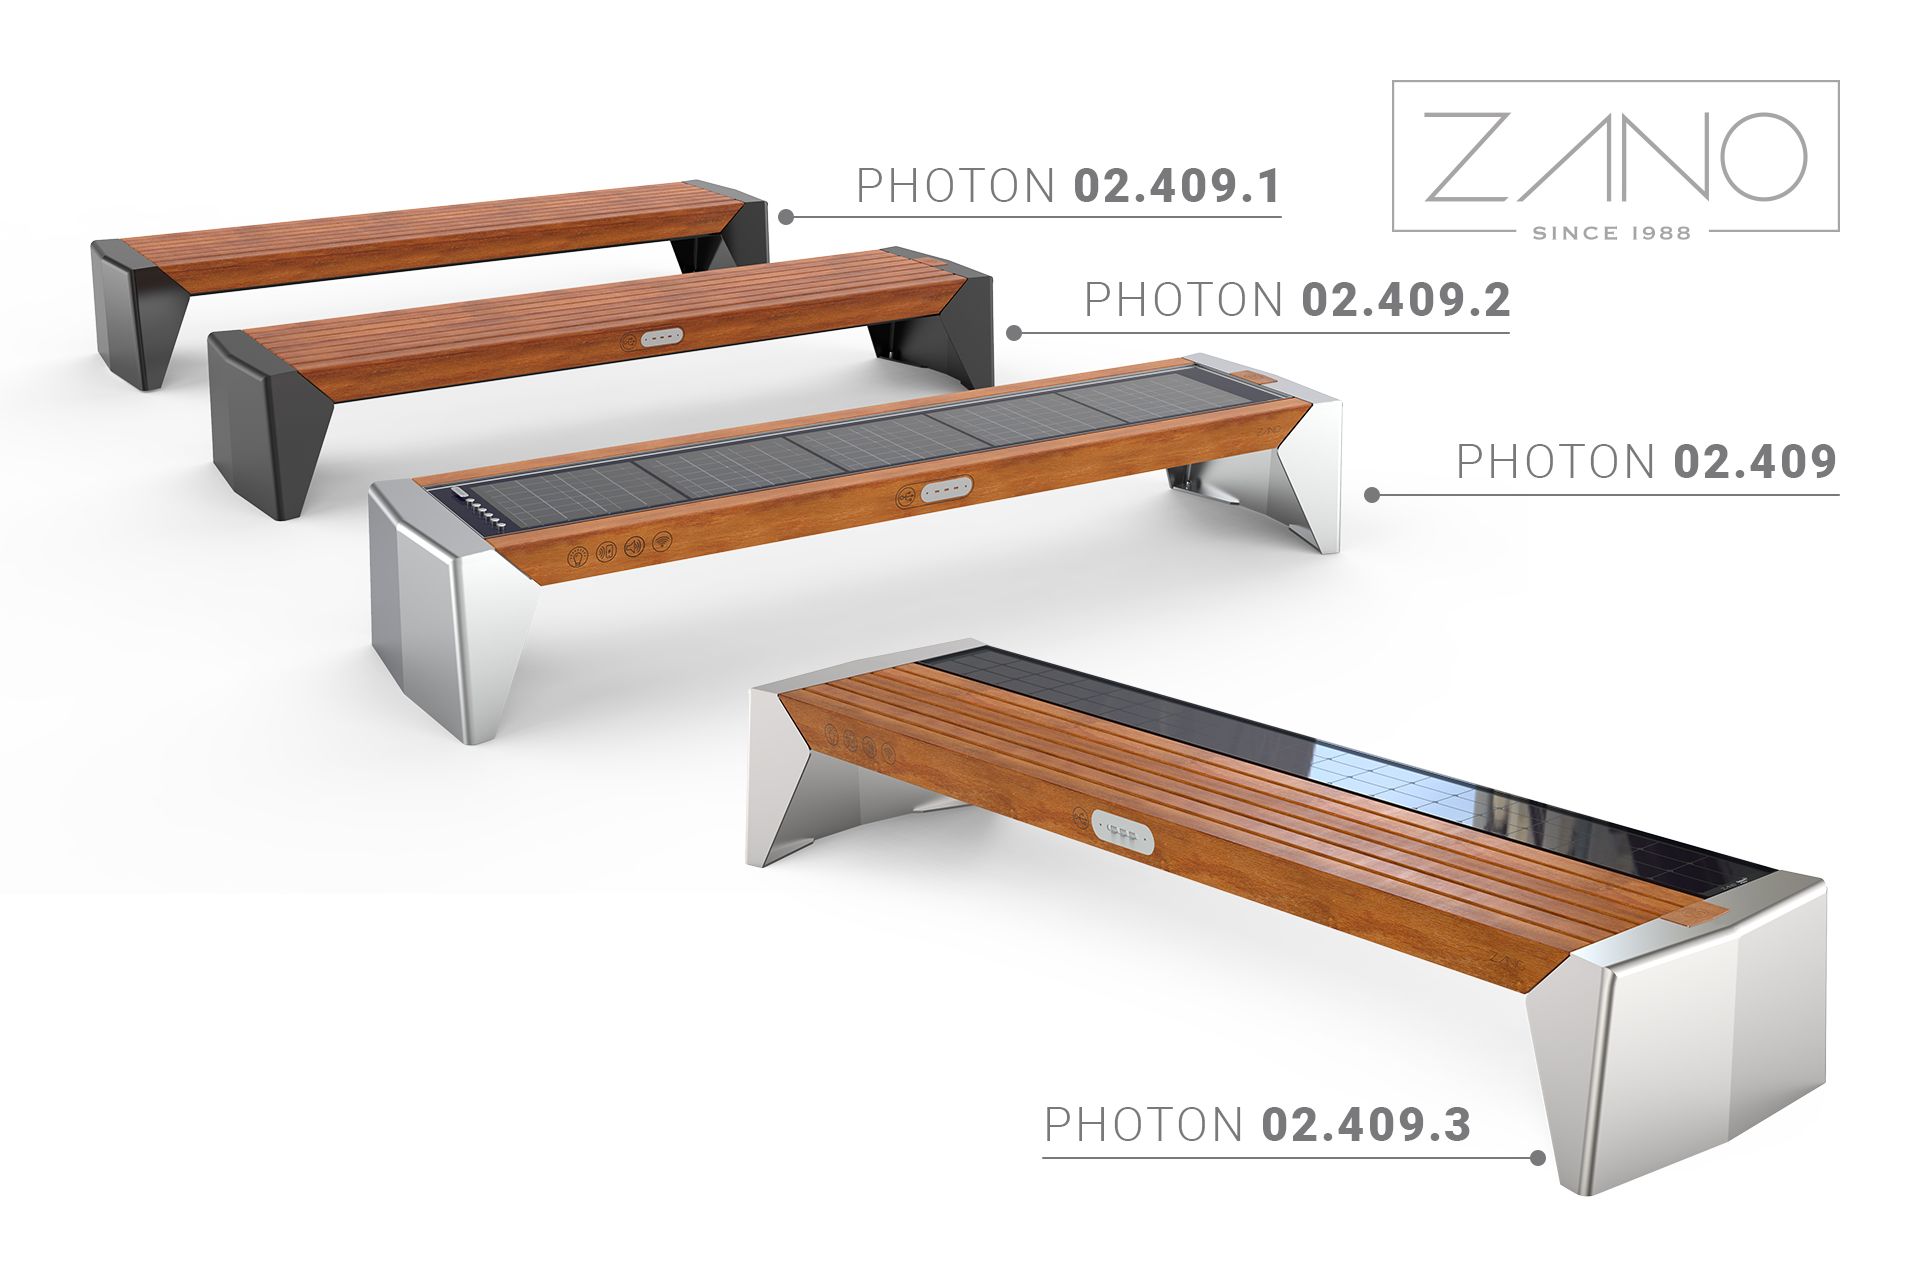 Photon-Solarbänke | ZANO Smart City